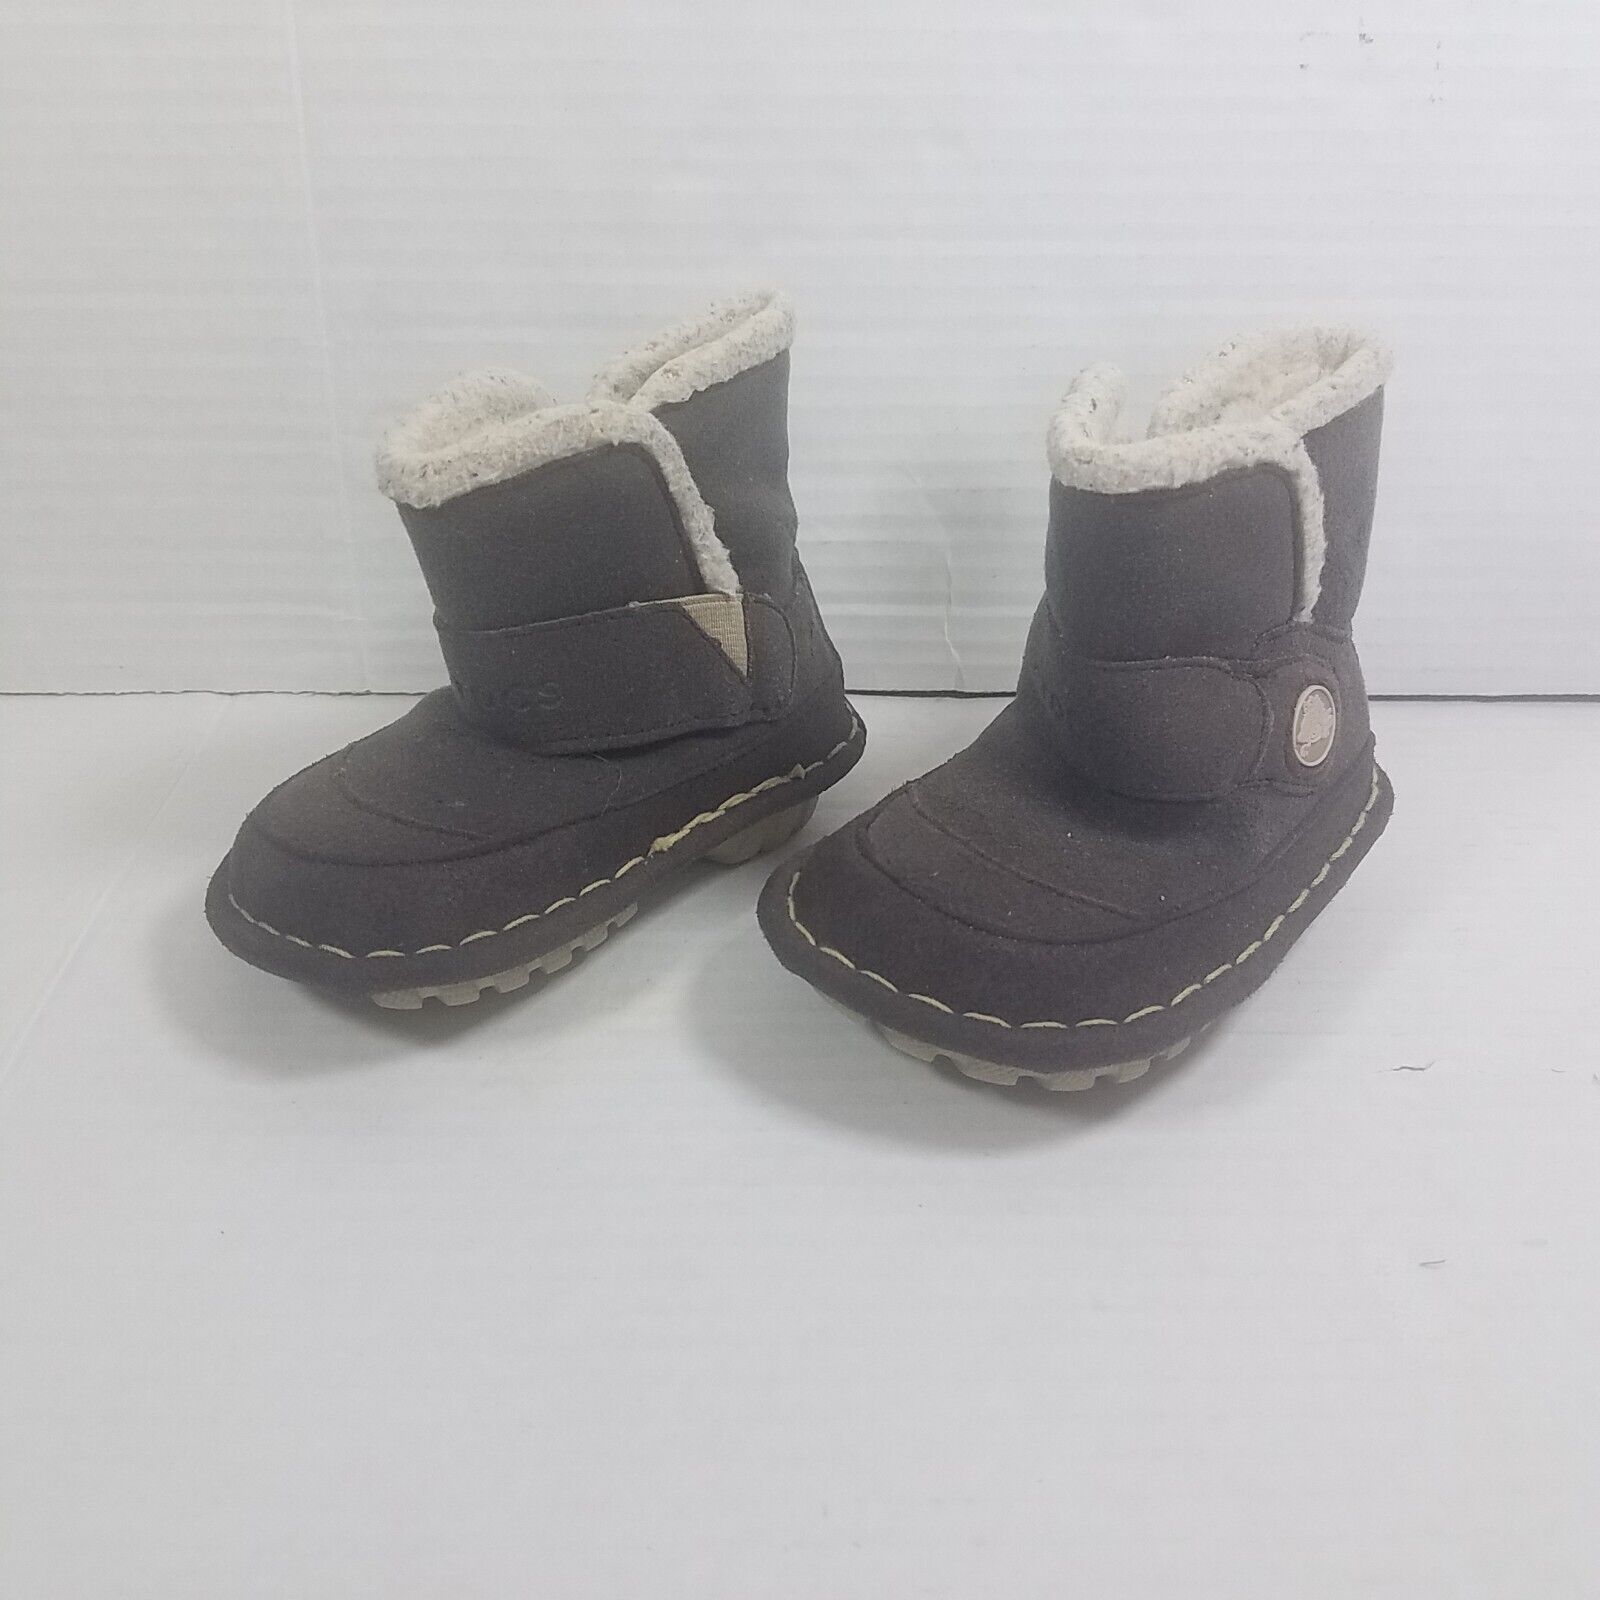 Crocs Girls Boots Size 4C Toddler Brown suede | eBay